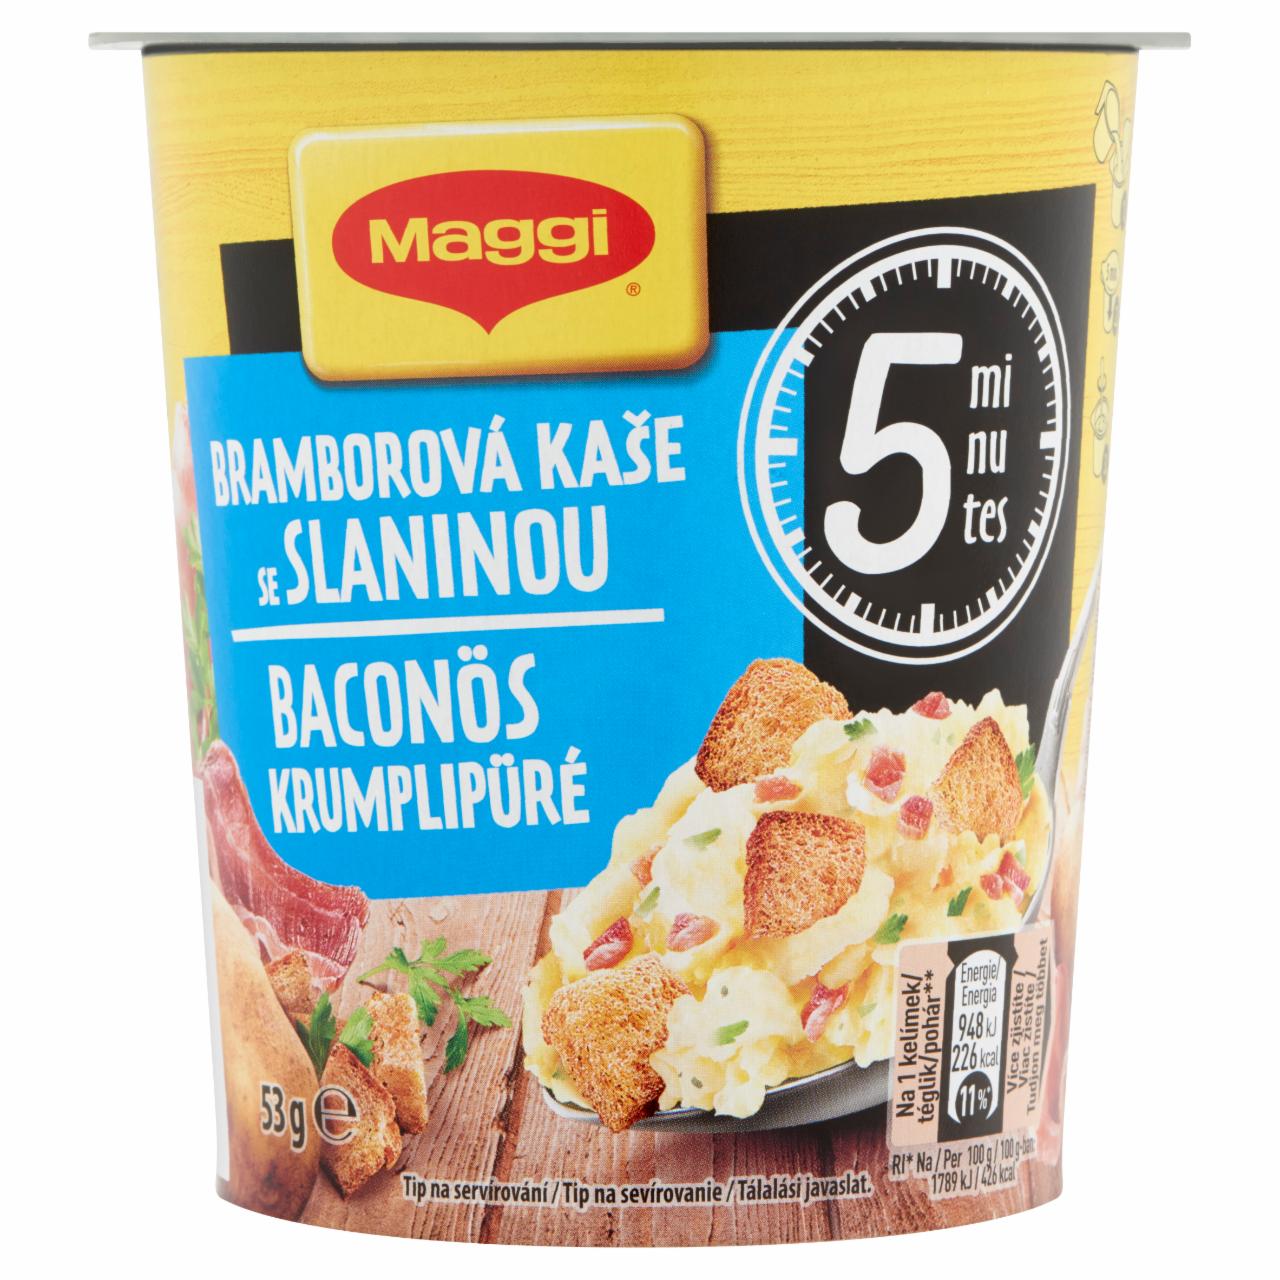 Képek - Maggi baconös krumplipüré 53 g